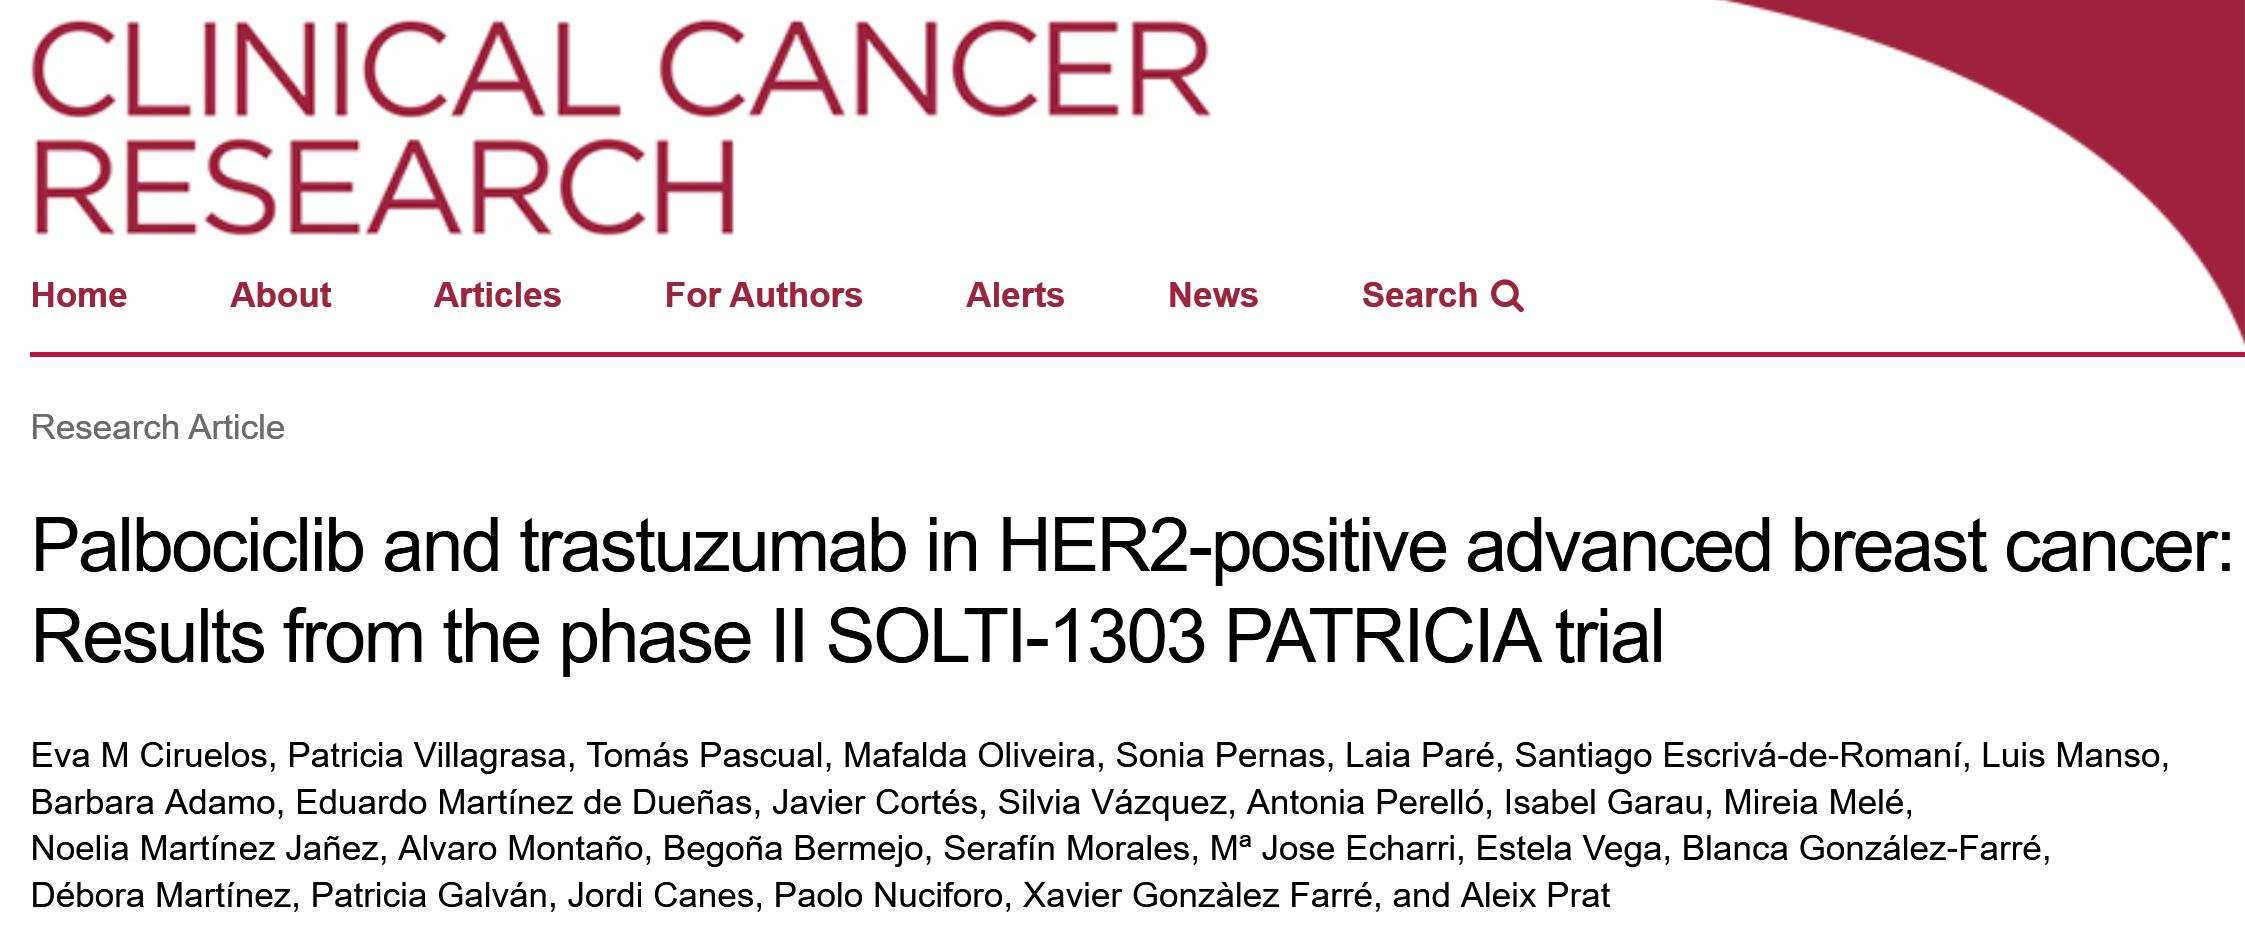 Clin Cancer Res：帕博西利联合曲妥珠单抗治疗HER2+晚期乳腺癌的疗效